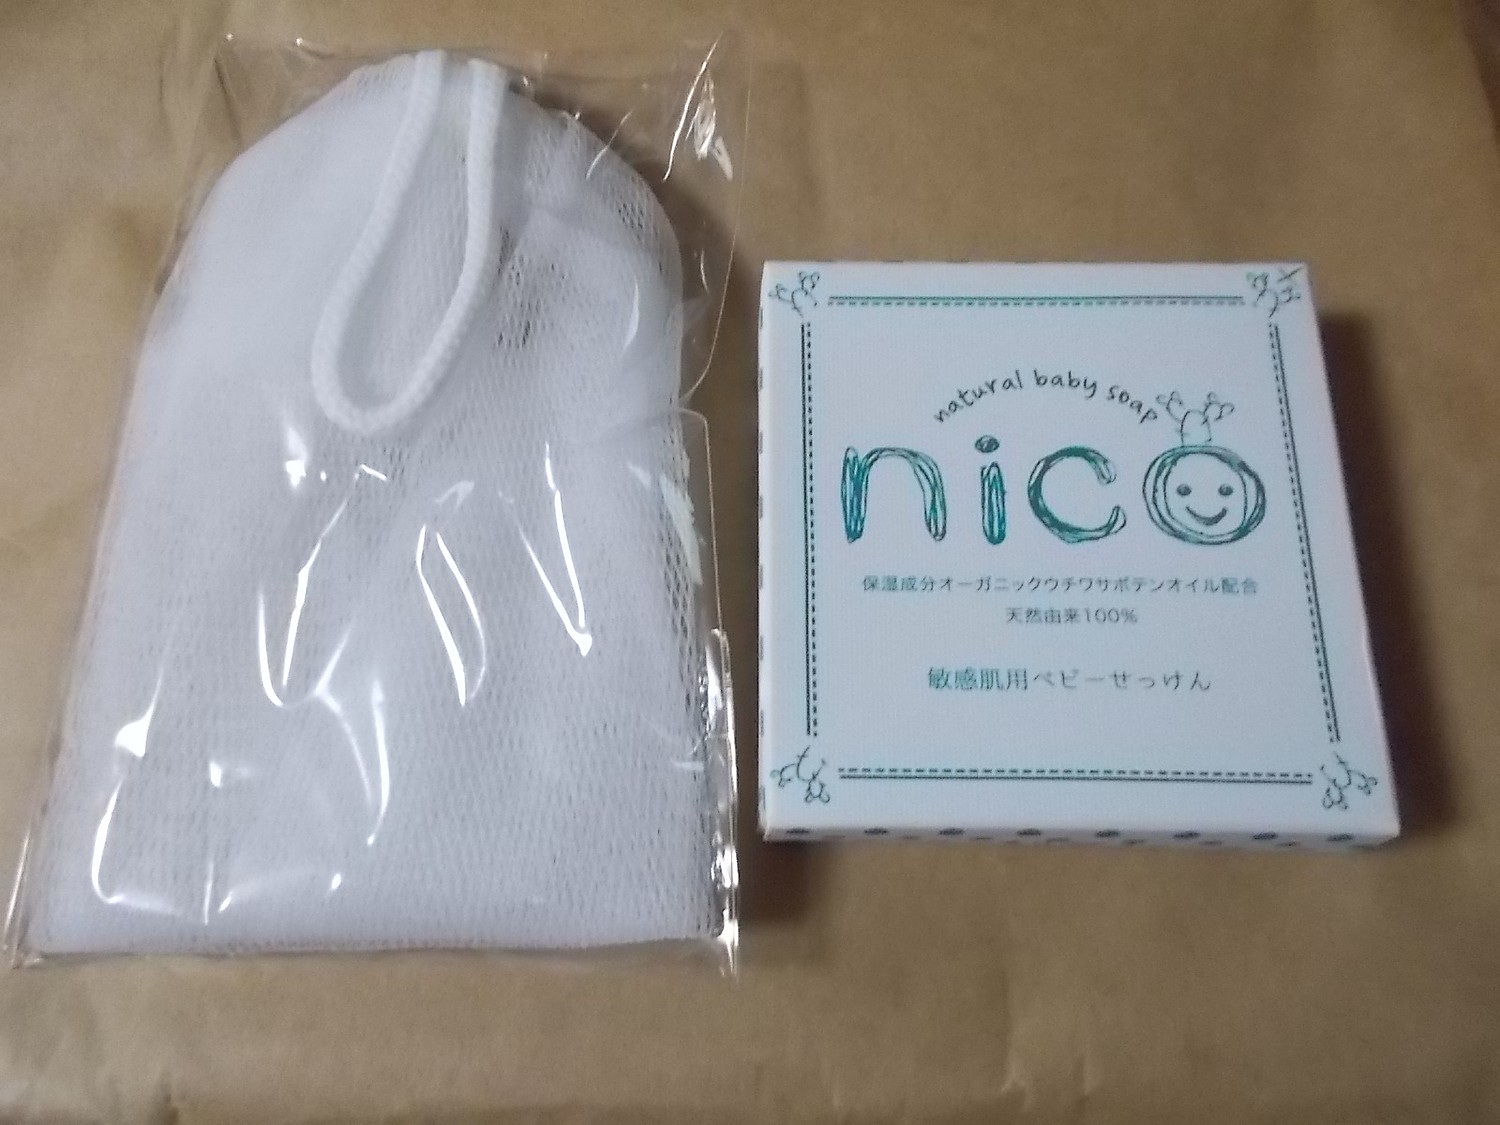 nico石鹸10個セット 敏感肌用ベビーせっけんの+spbgp44.ru